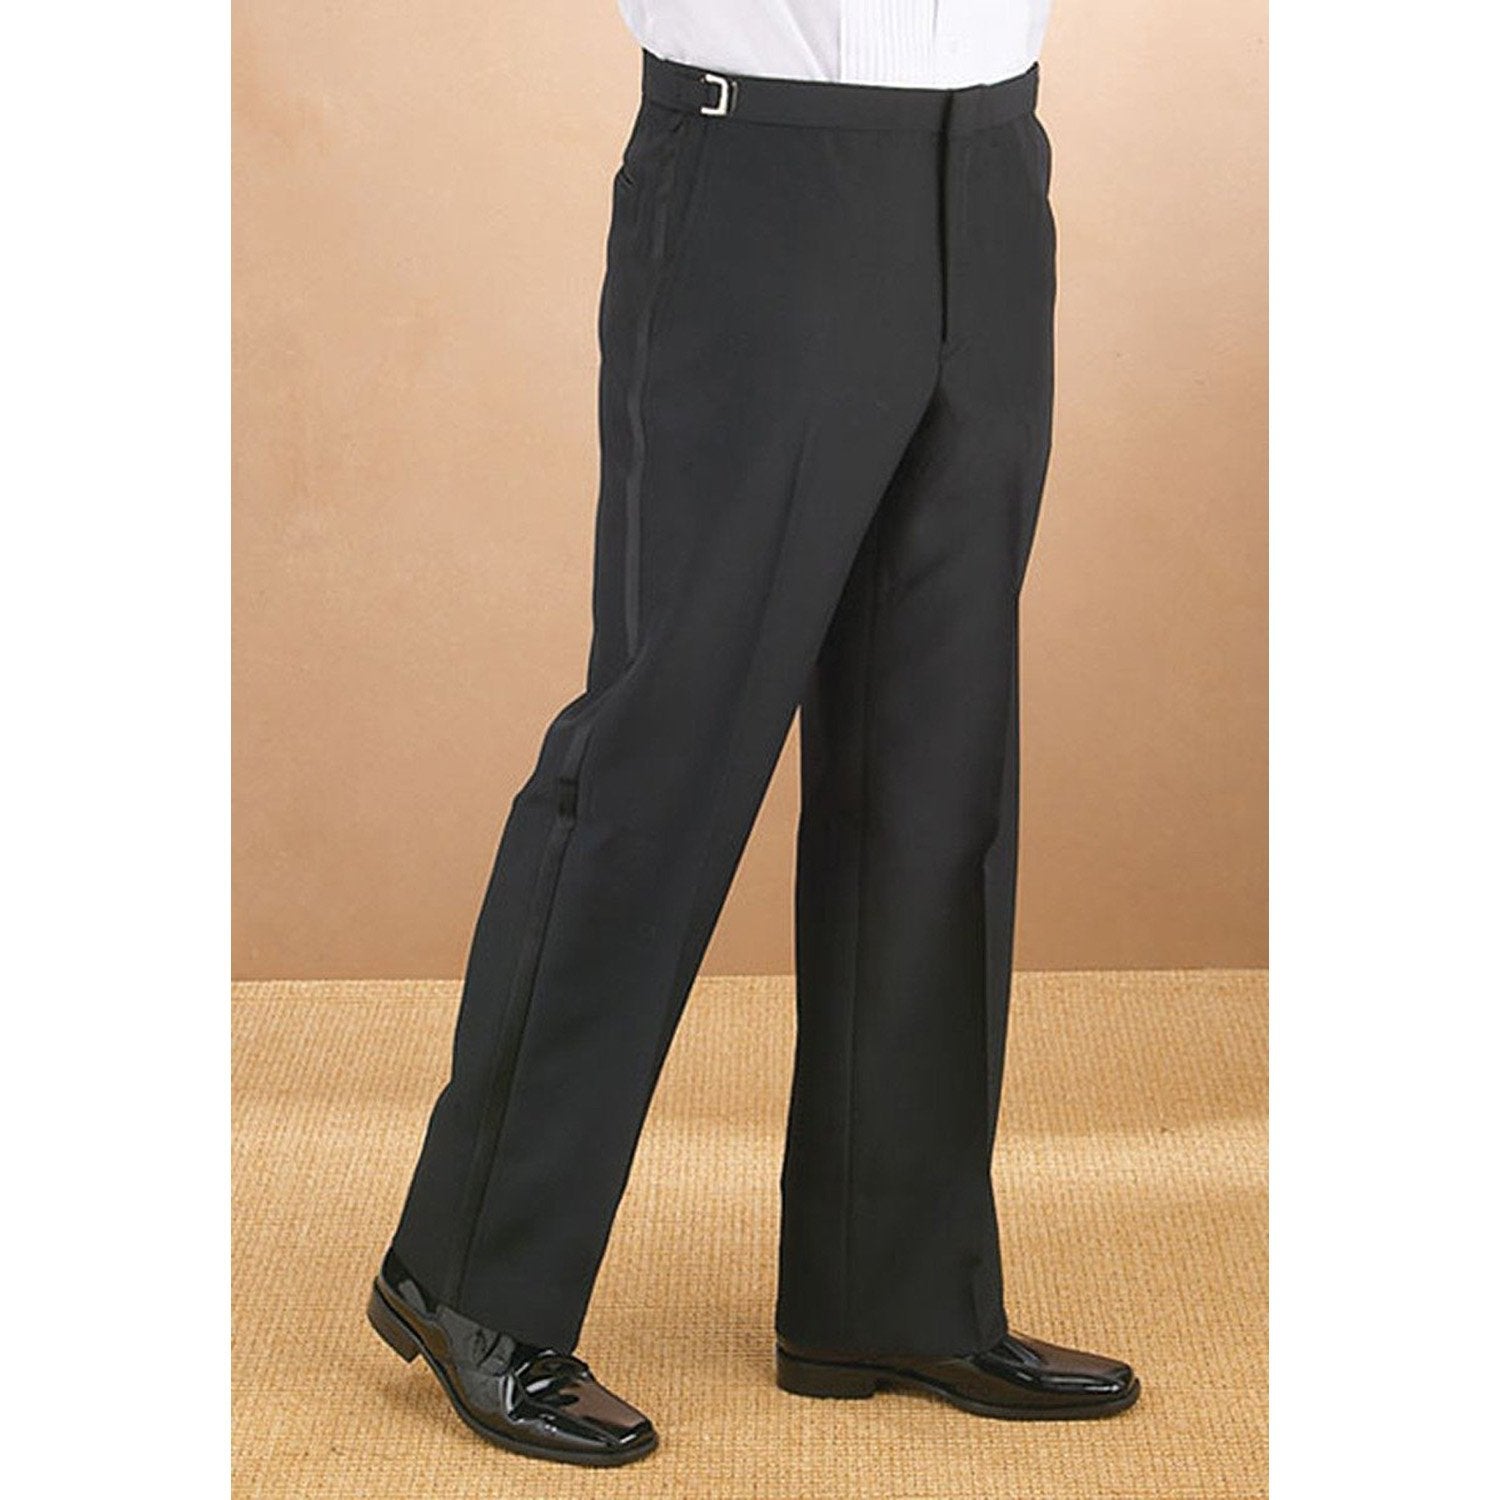 RGM Men's Tuxedo Pants Flat Front with Side Satin Stripe Black 28W x 29L at  Amazon Men's Clothing store